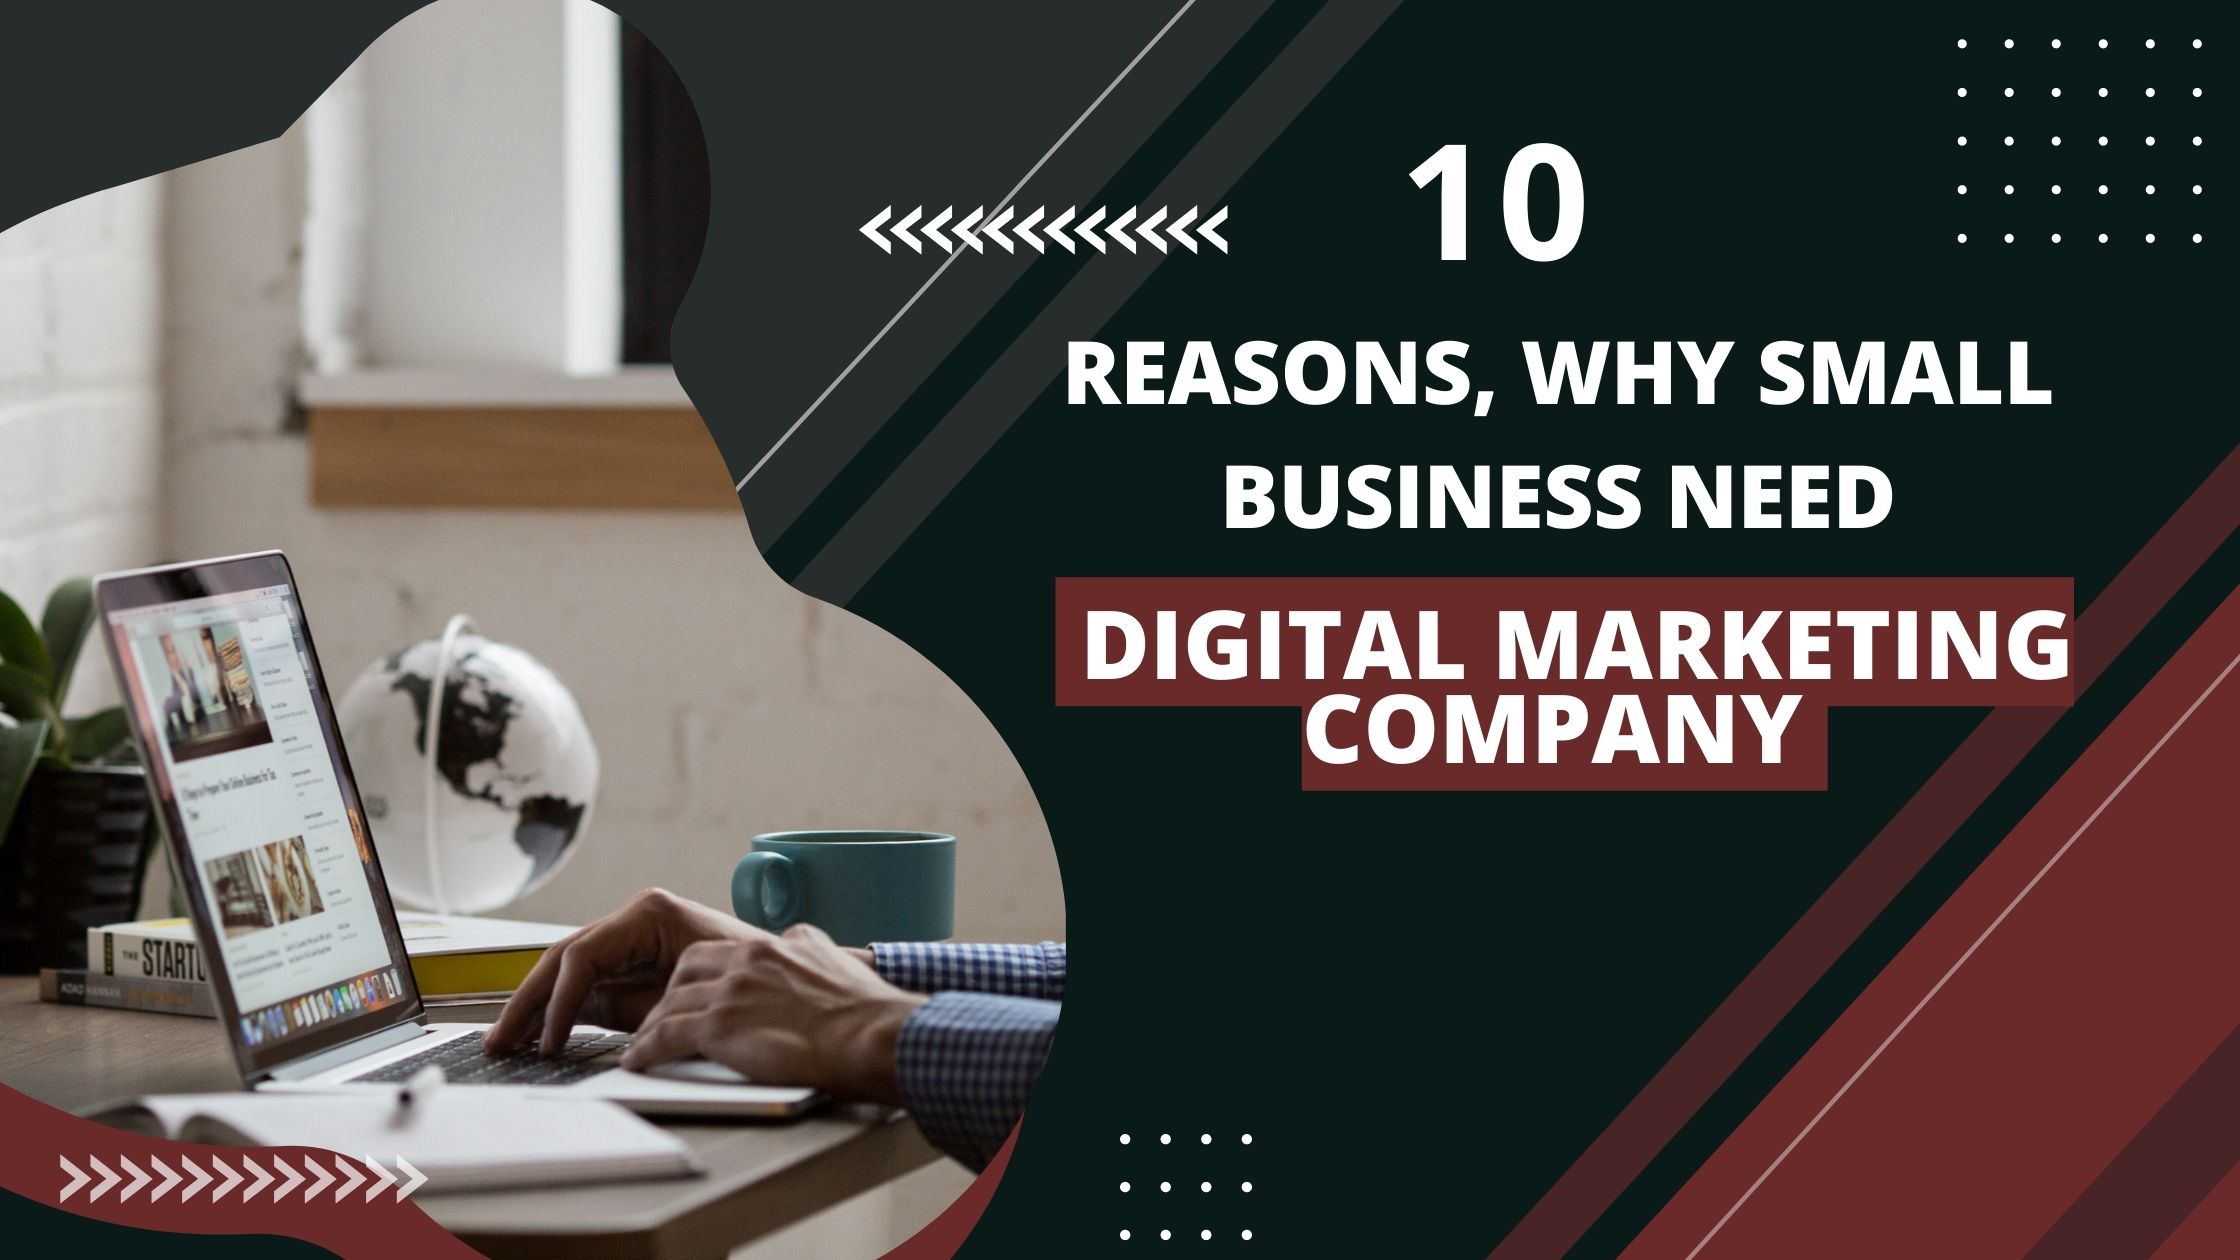 Small Business Need Digital Marketing